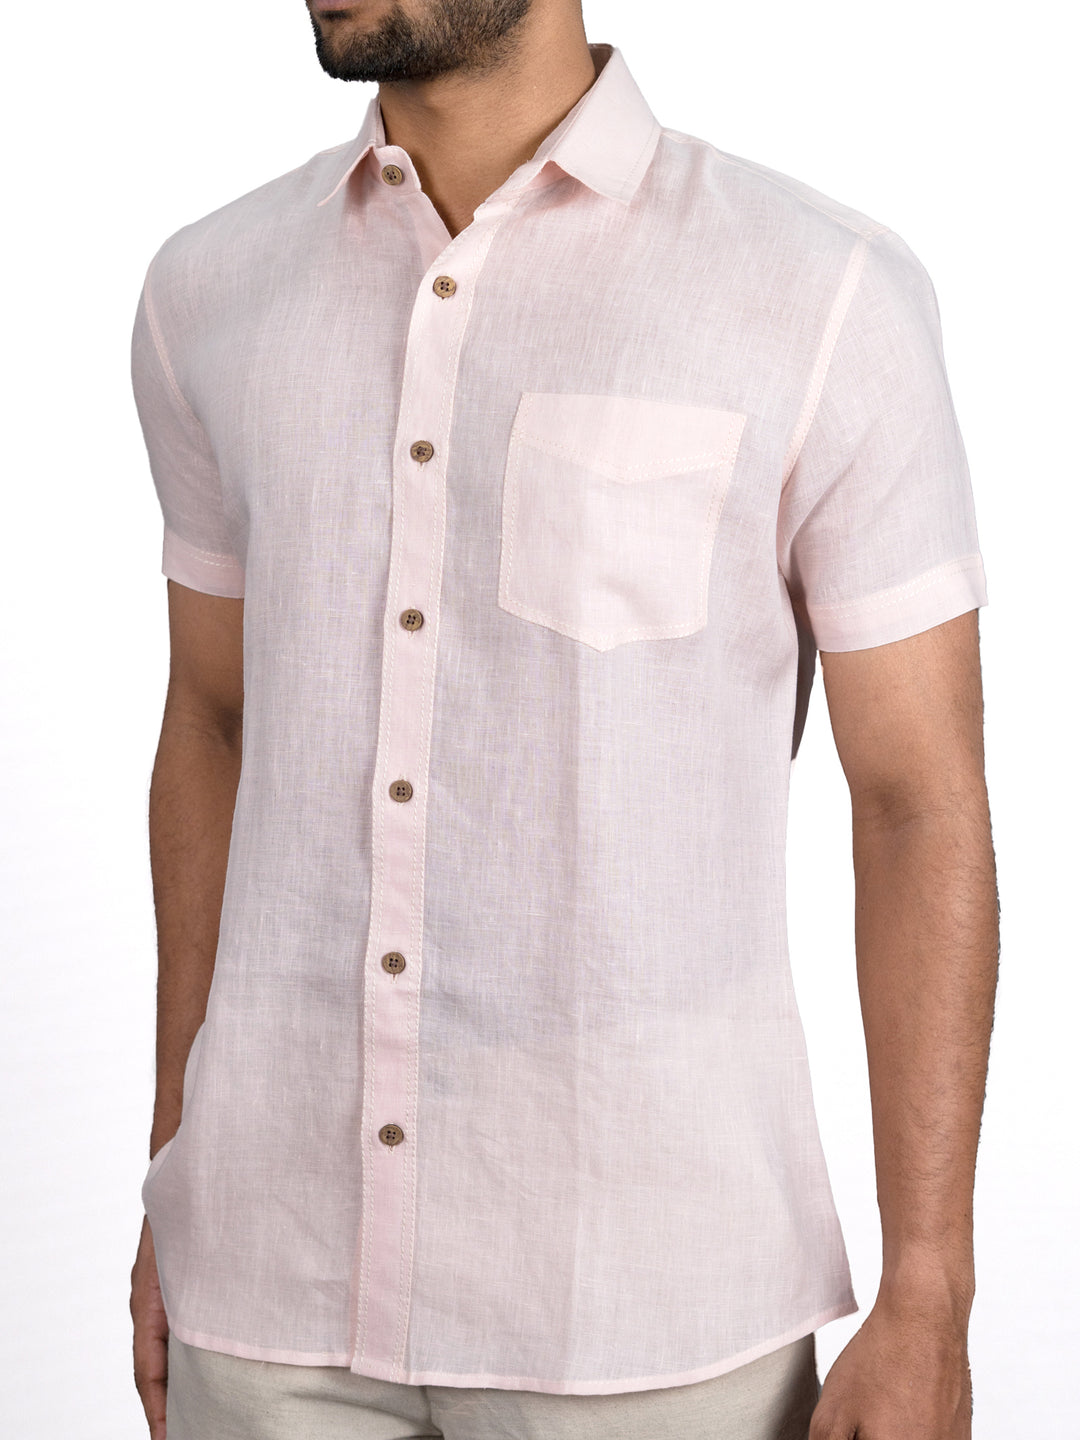 Josh - Pure Linen Half Sleeve Shirt - Blush Pink